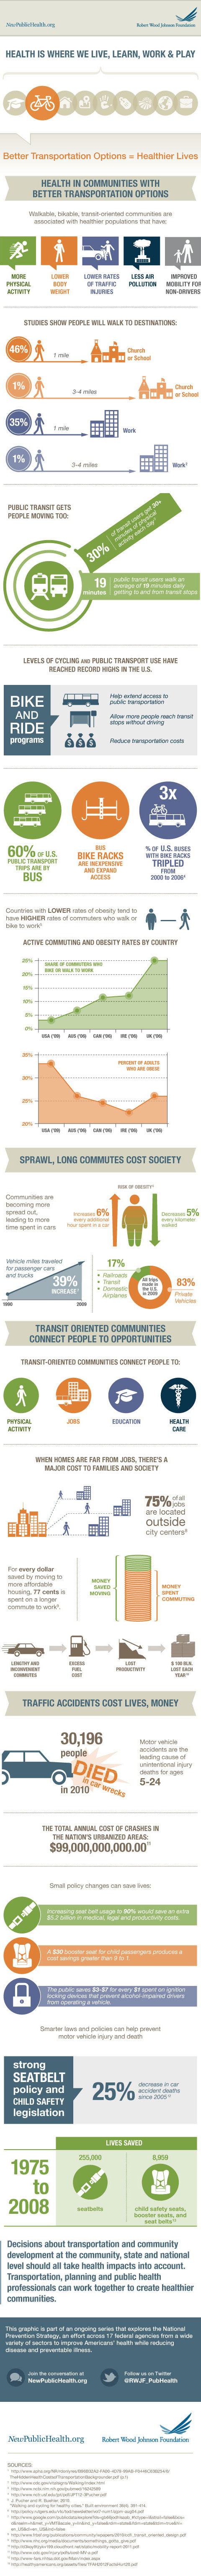 TransportationHealthInfographic.jpg